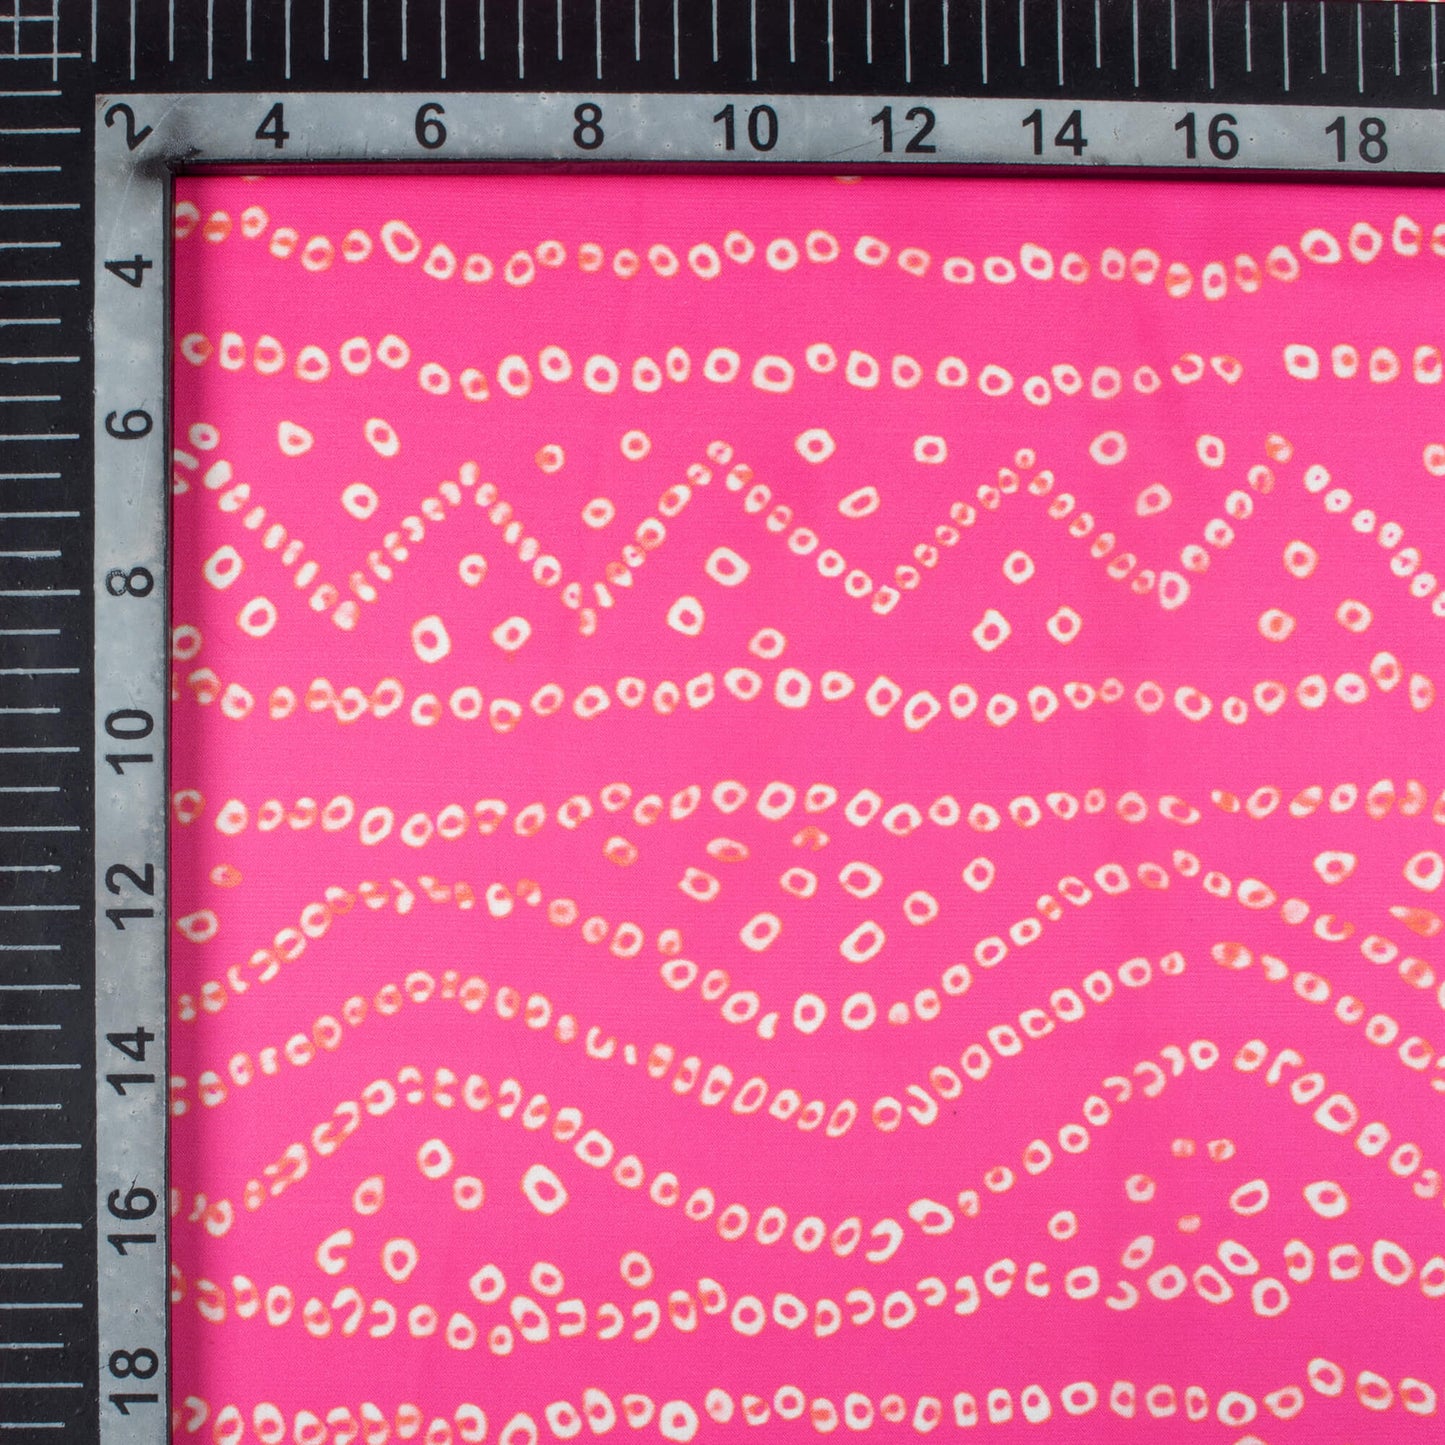 Creamy Pink Bandhani Pattern Digital Print Organza Satin Fabric